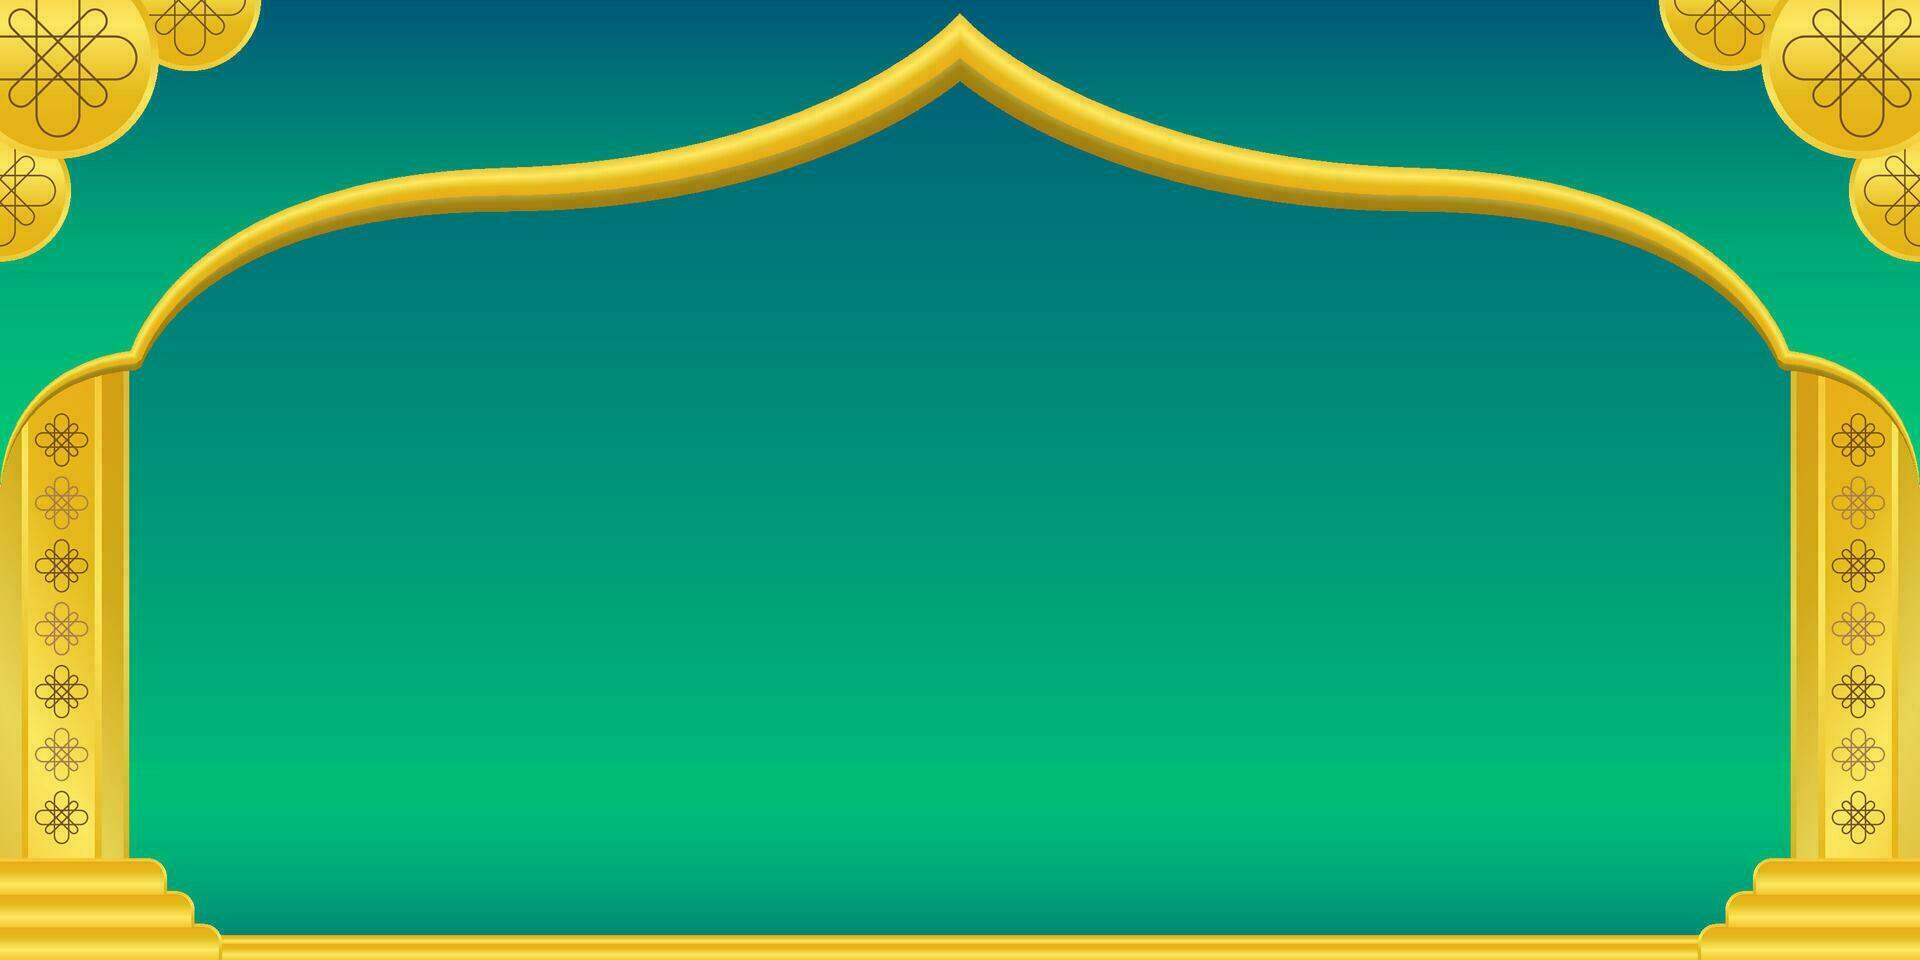 Islamic Maulid Nabi Muhammad SAW Banner Background vector